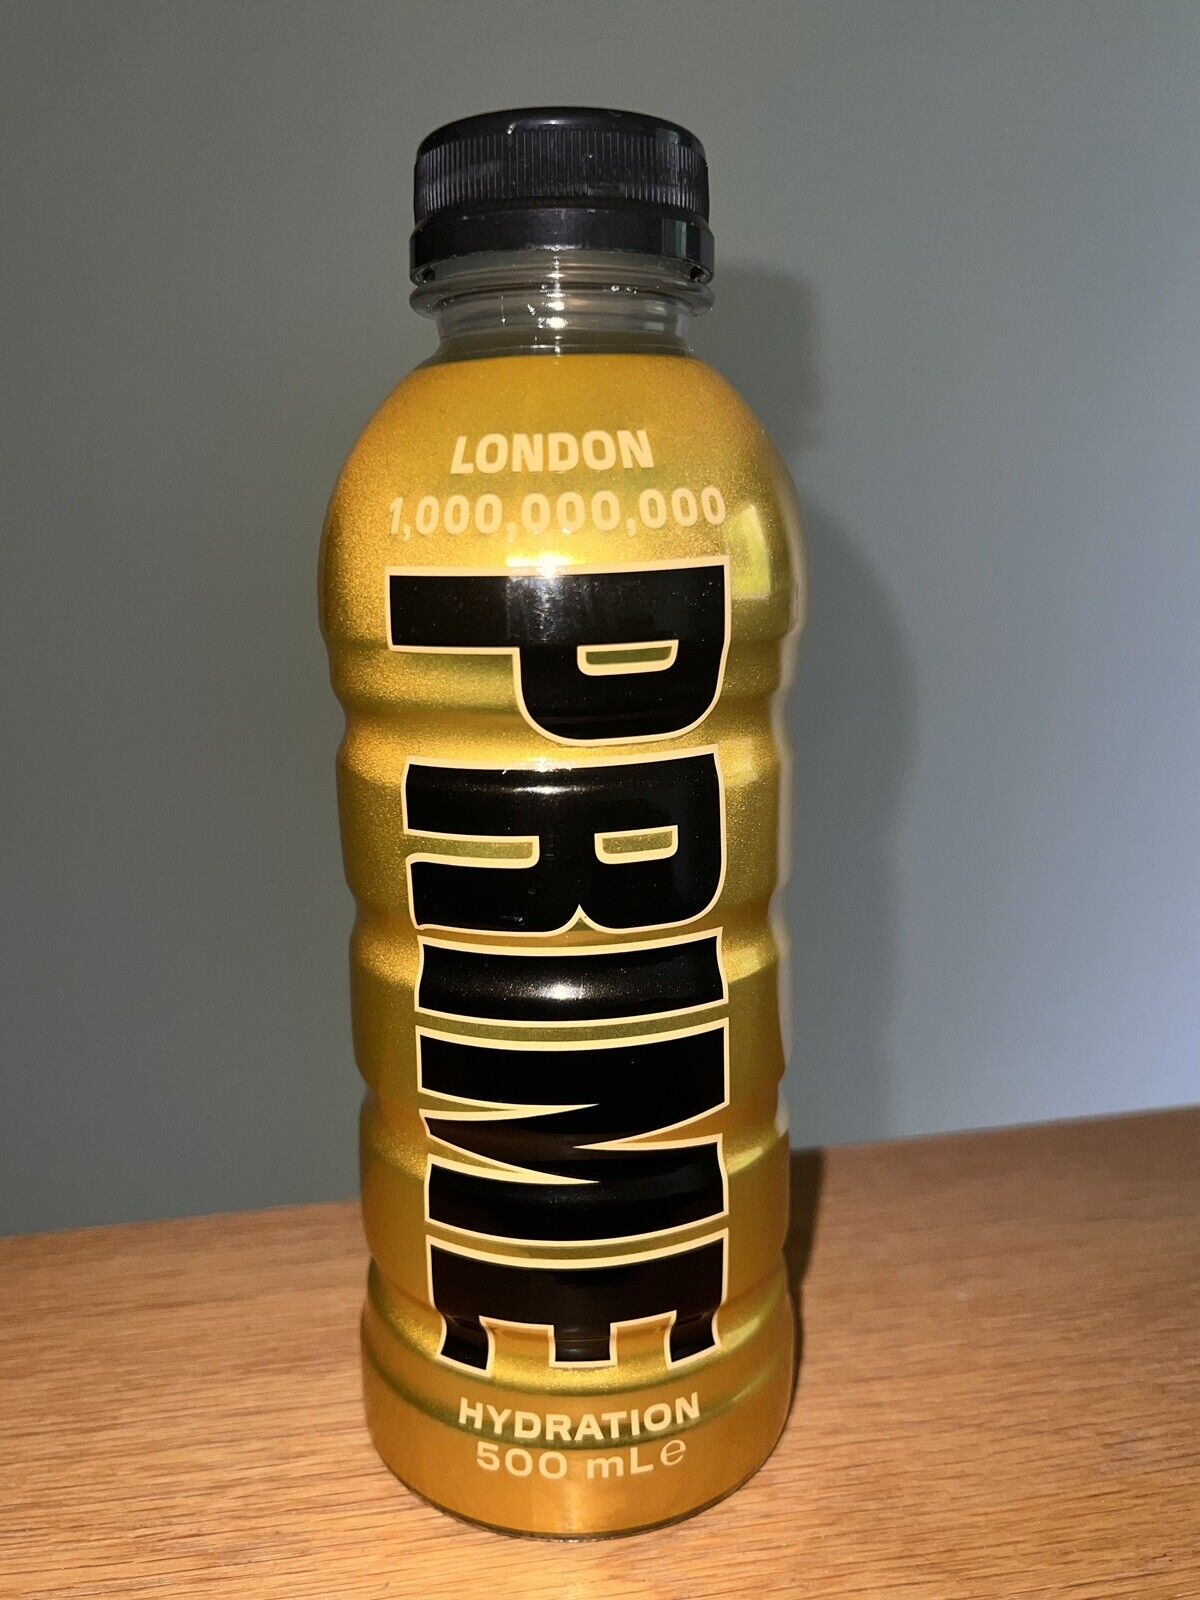 GOLD PRIME HYDRATION Drink 500 mL - LONDON Limited Edition 1 Billion - NEW